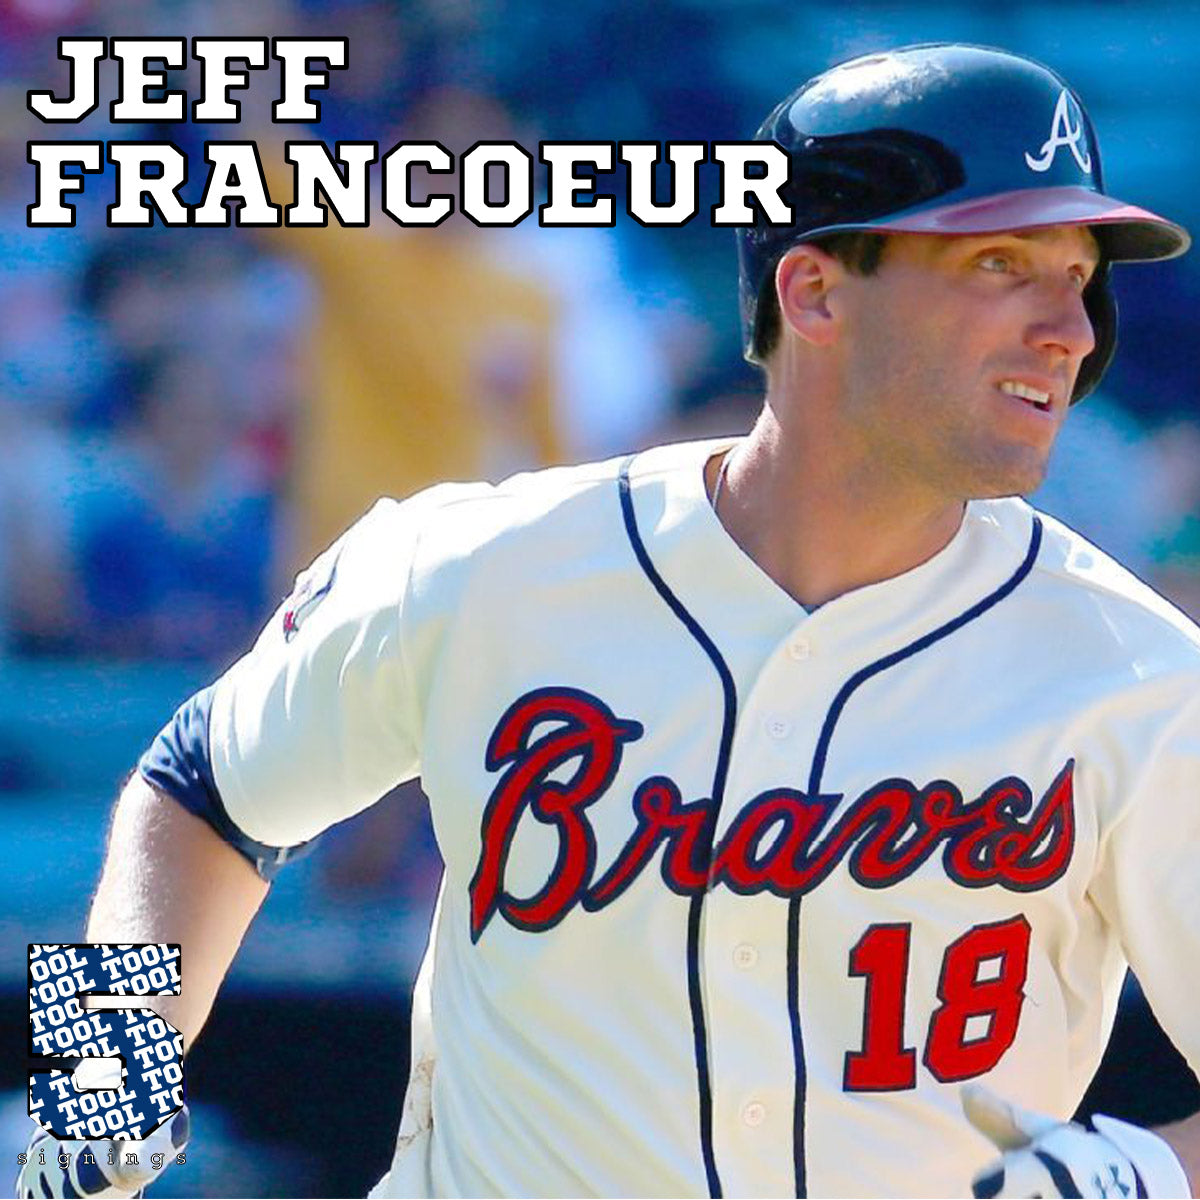 Who is Jeff Francoeur?